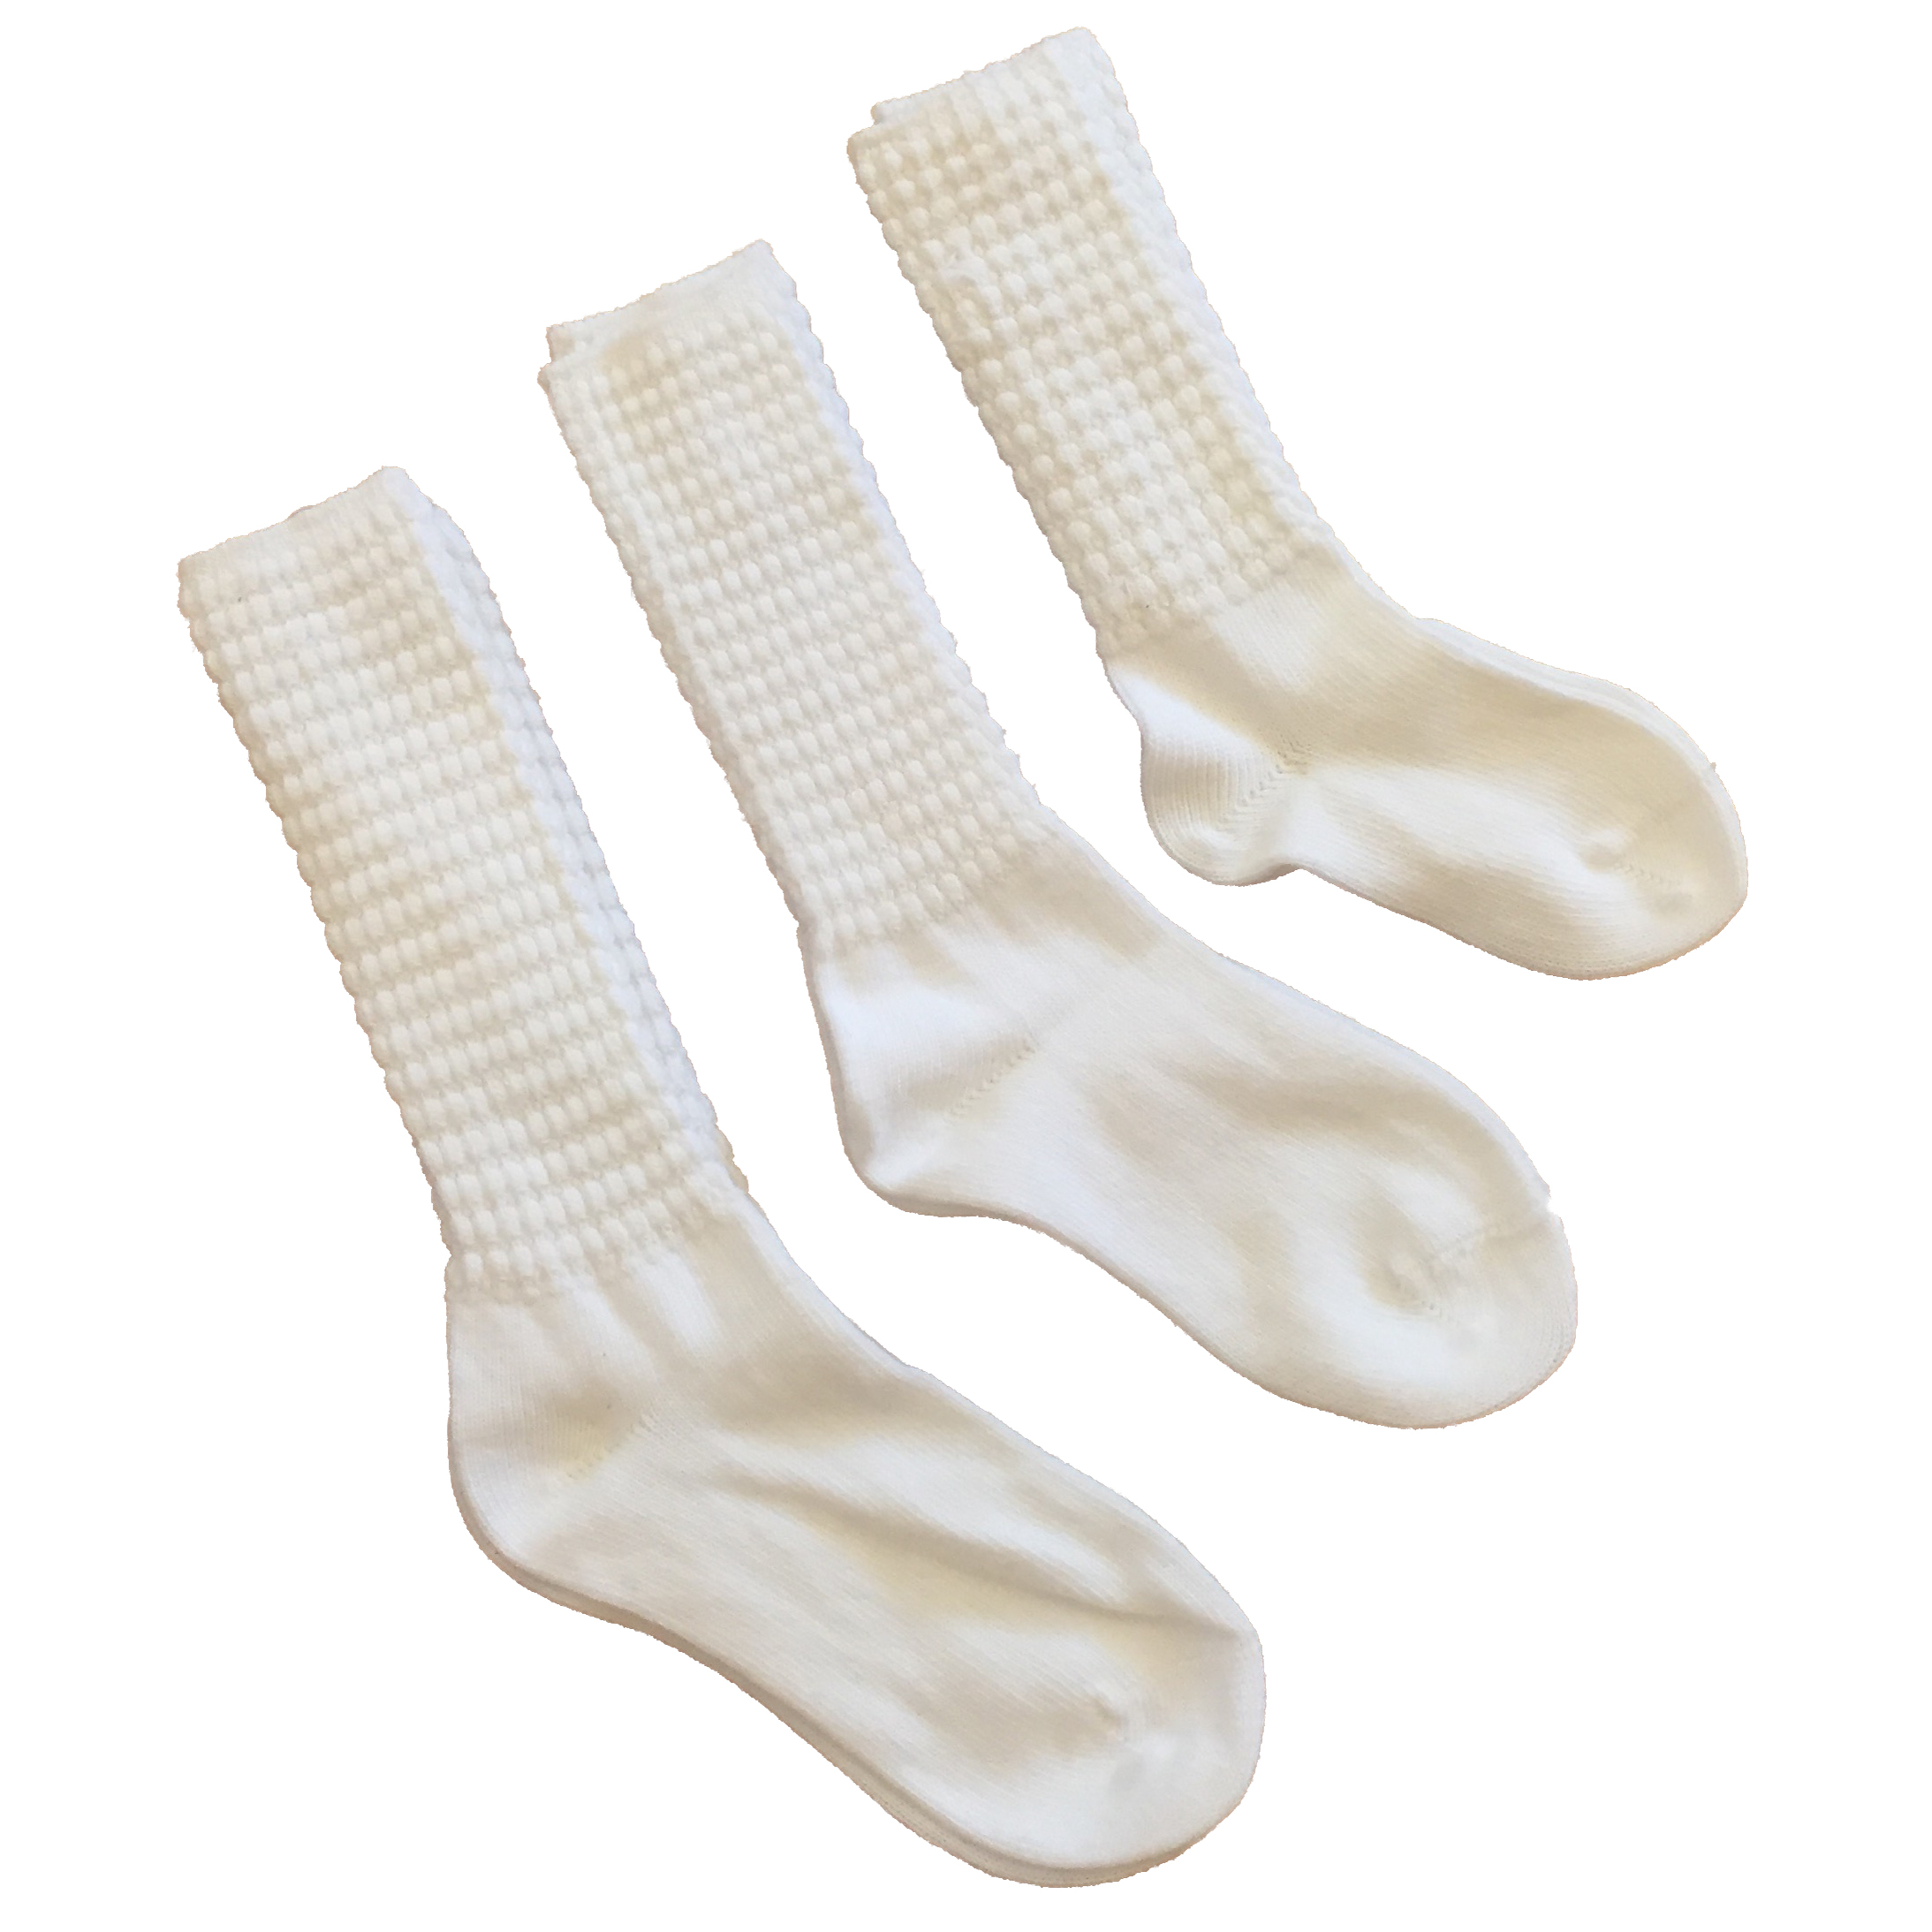 3 Pairs of IRISH DANCE Socks POODLE Design Choice of sizes 